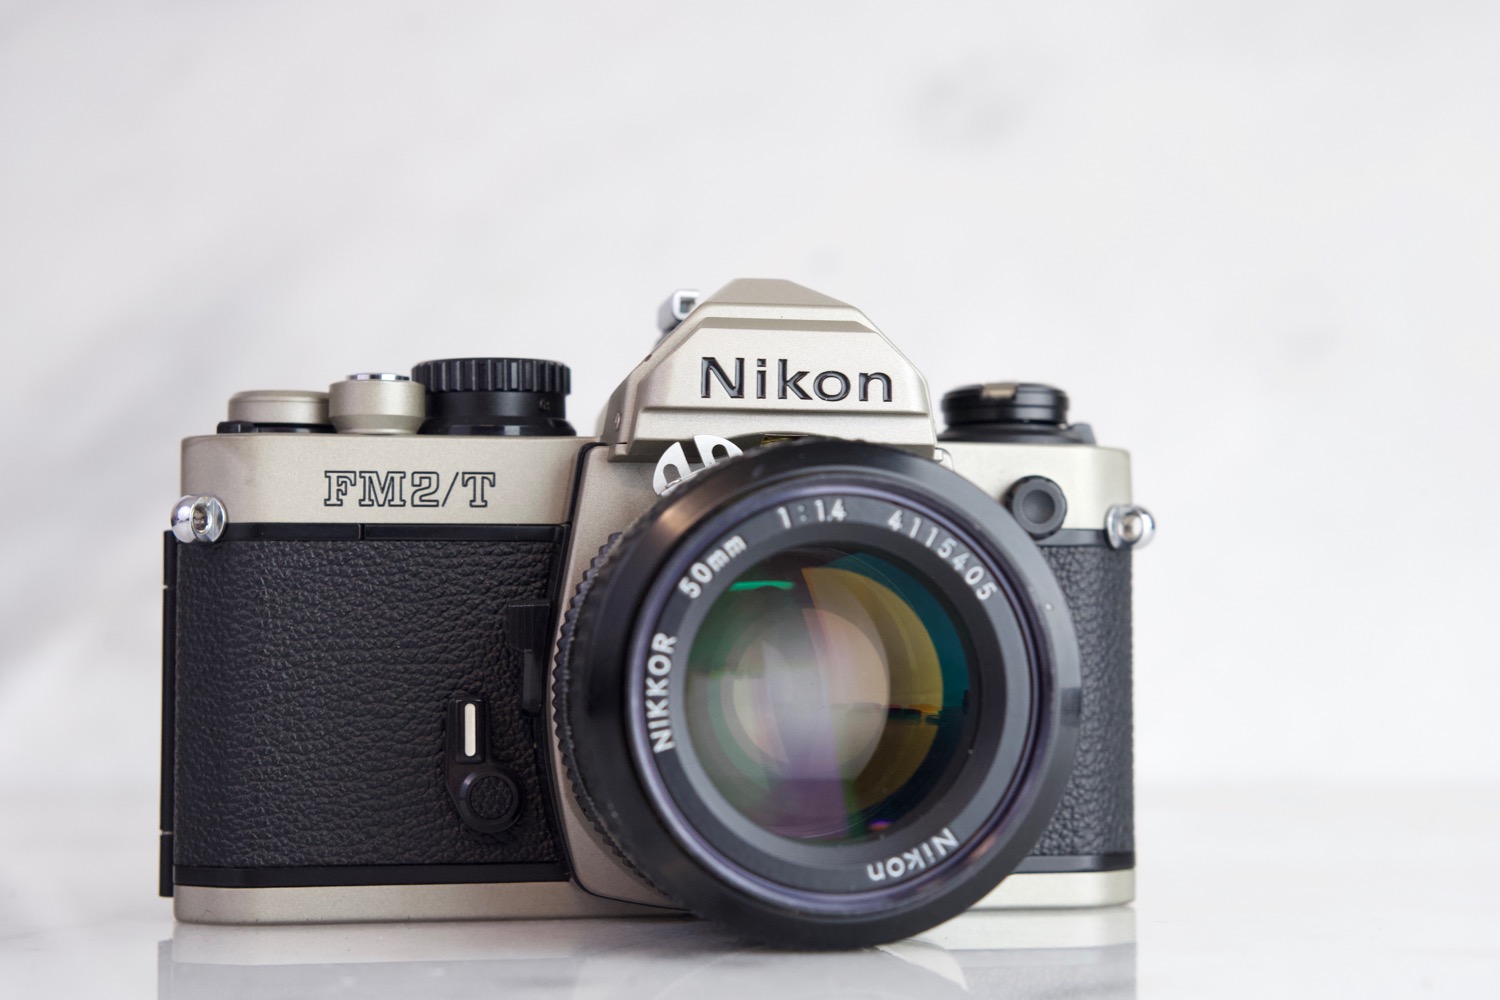 Nikon FM2/T 35mm Film SLR Camera with Nikon Nikkor 50mm F/1.4 Fast Prime  Lens, Lens Cap and Batteries - Fully Functional — F Stop Cameras